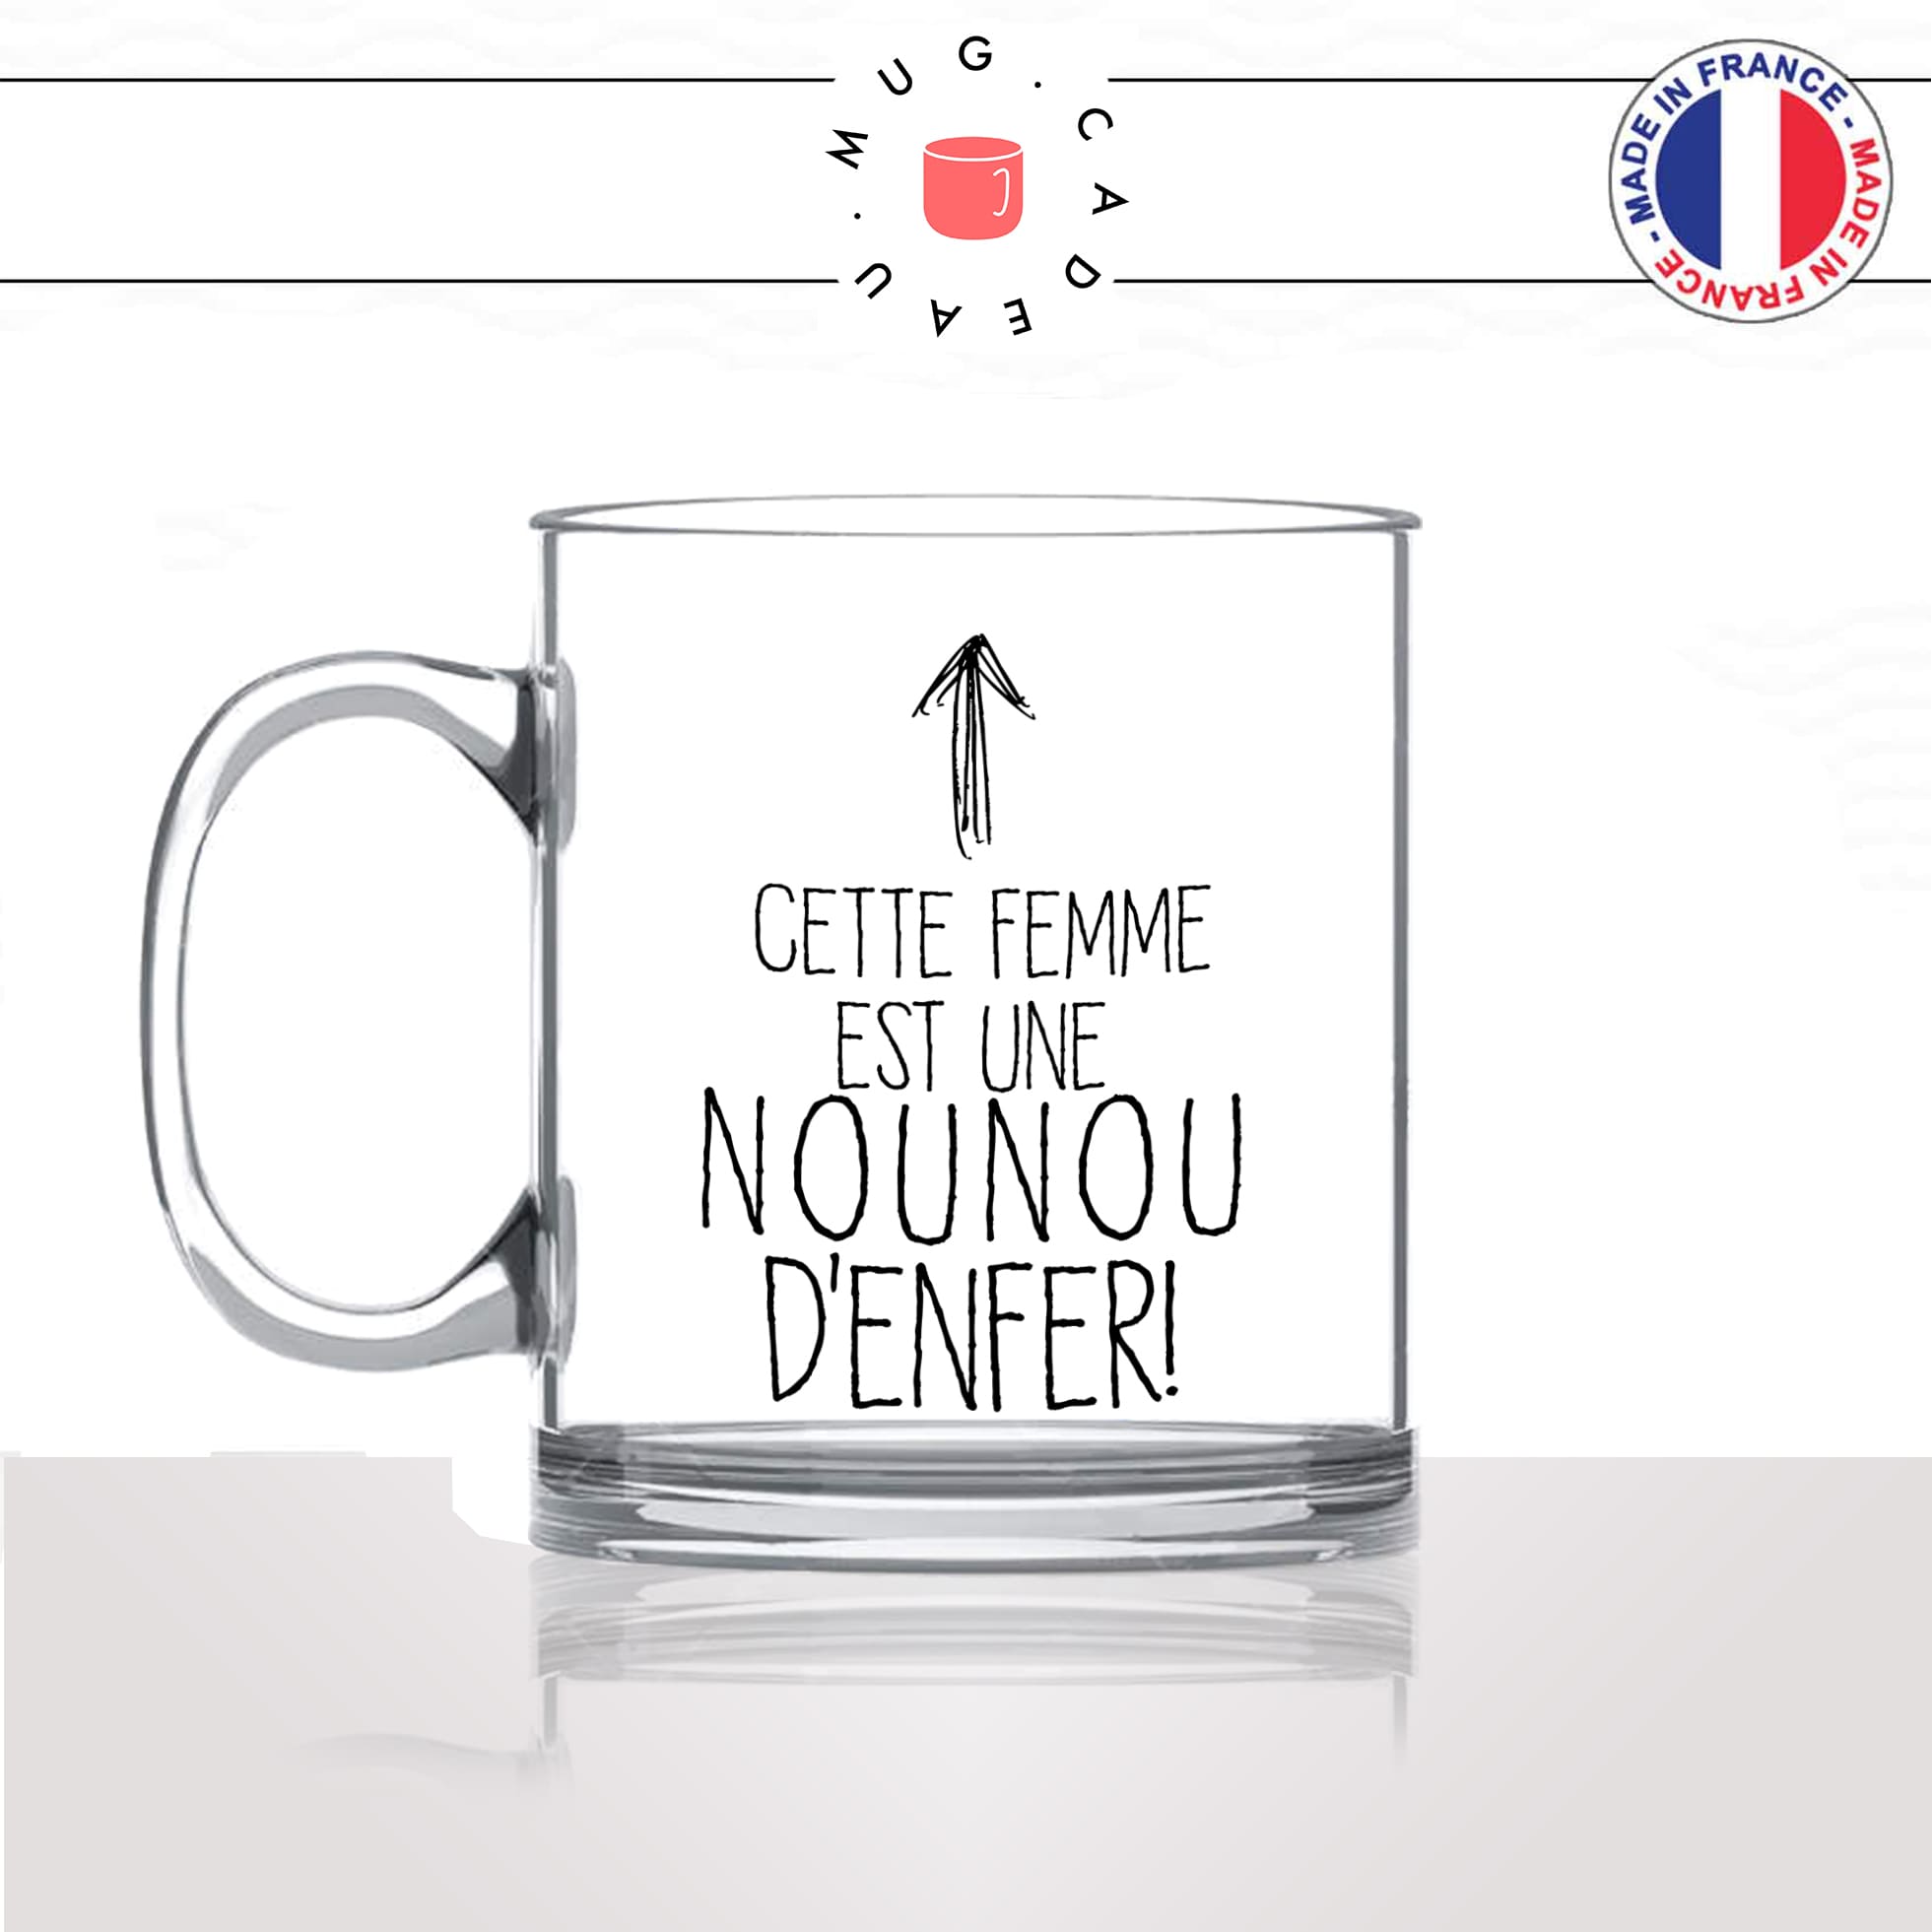 Mug Nounou D'amour - Par Métiers/Nounou - Mug-Cadeau